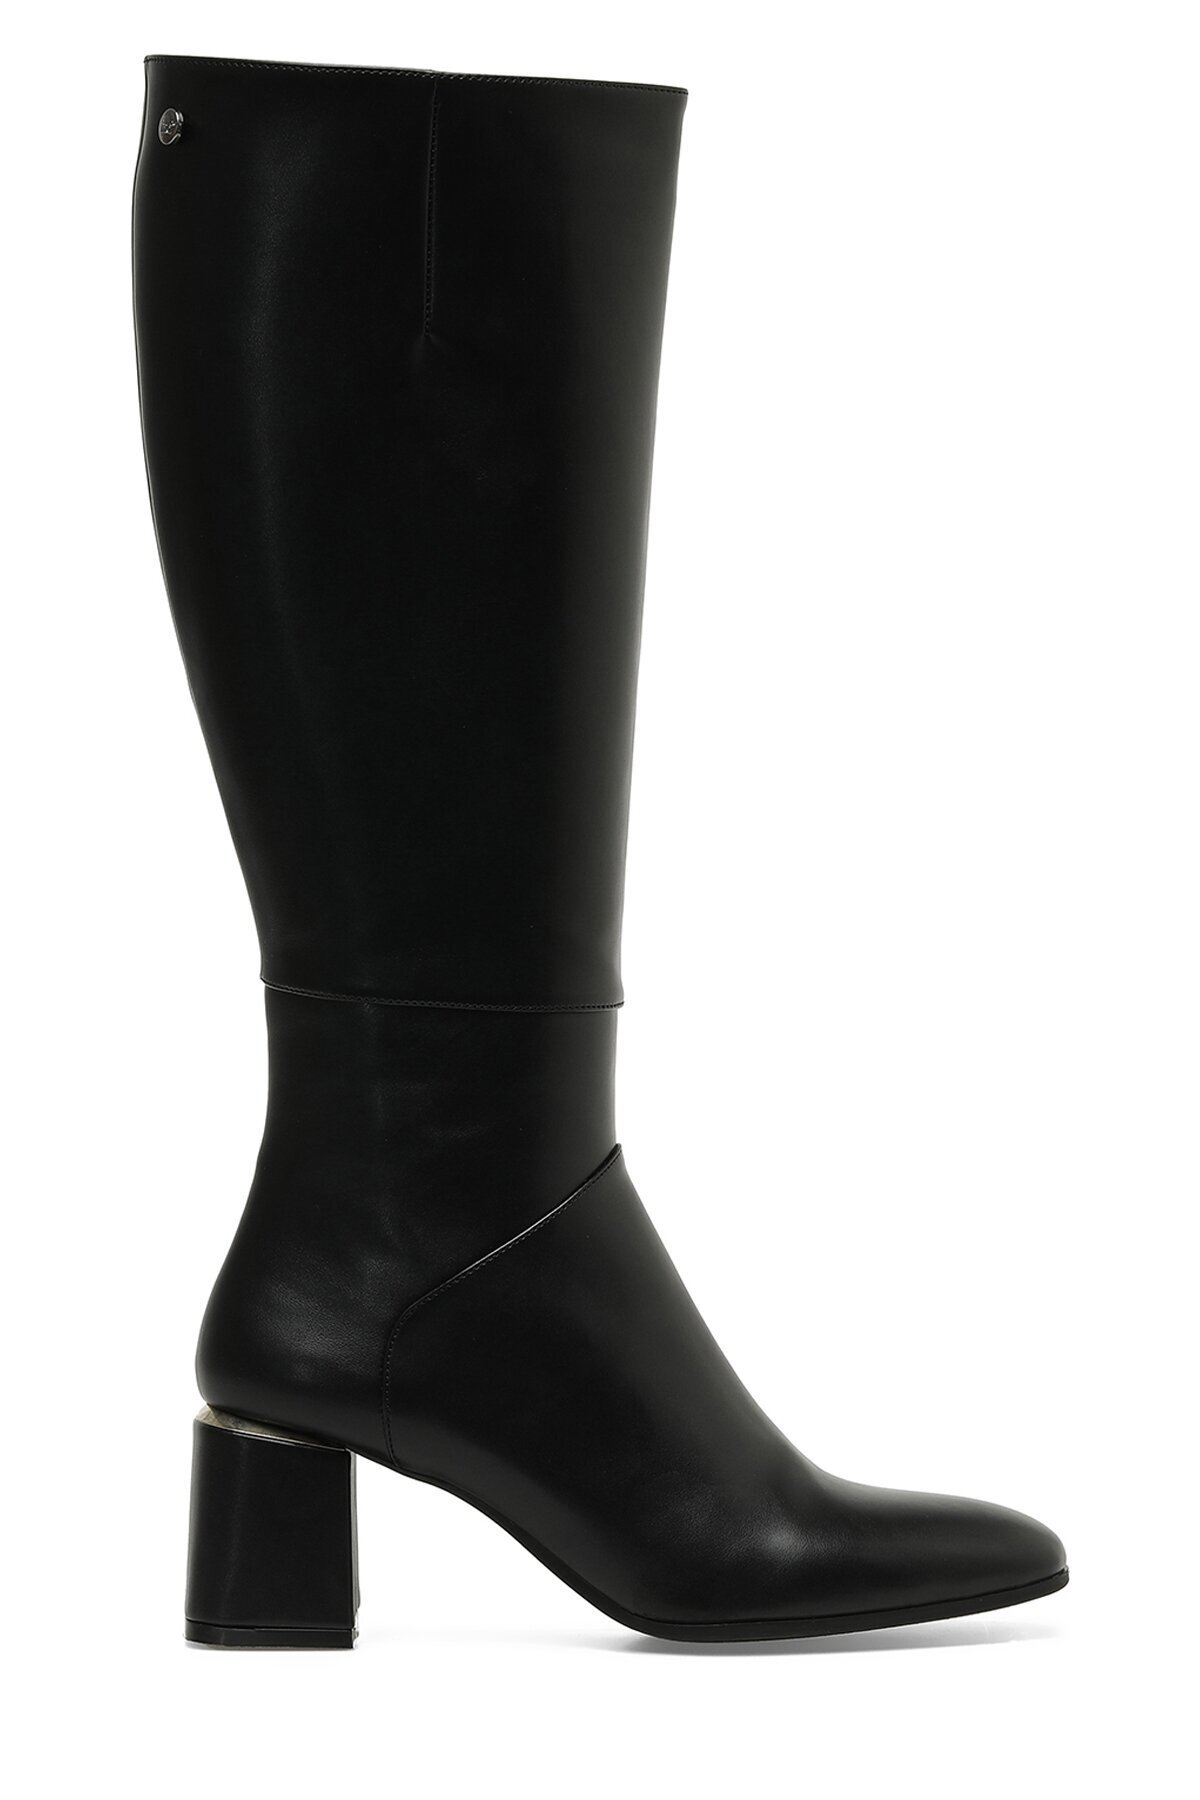 İnci Black Women's Heeled Boots